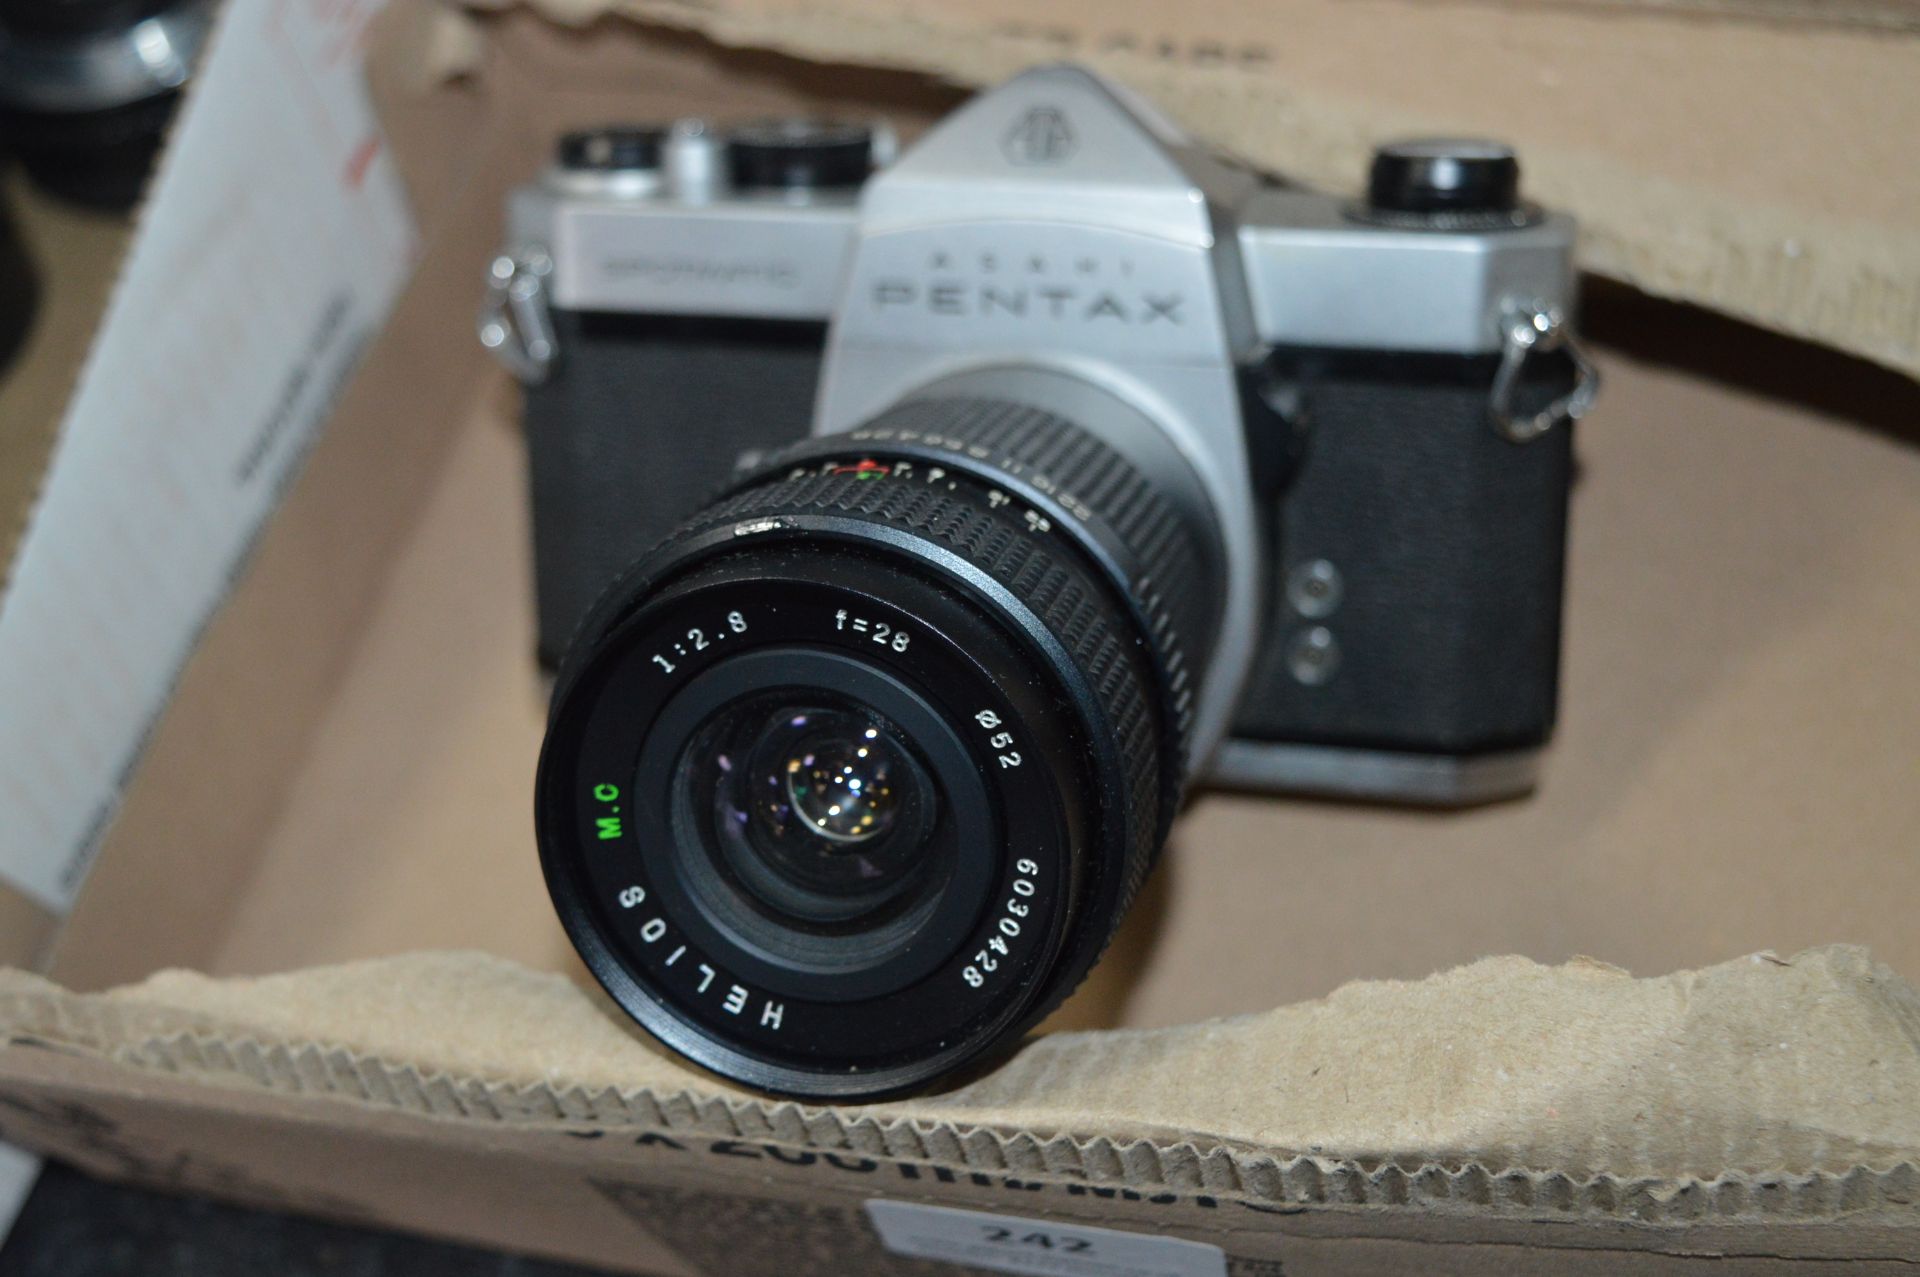 Pentax Spotmatic Camera and Lens